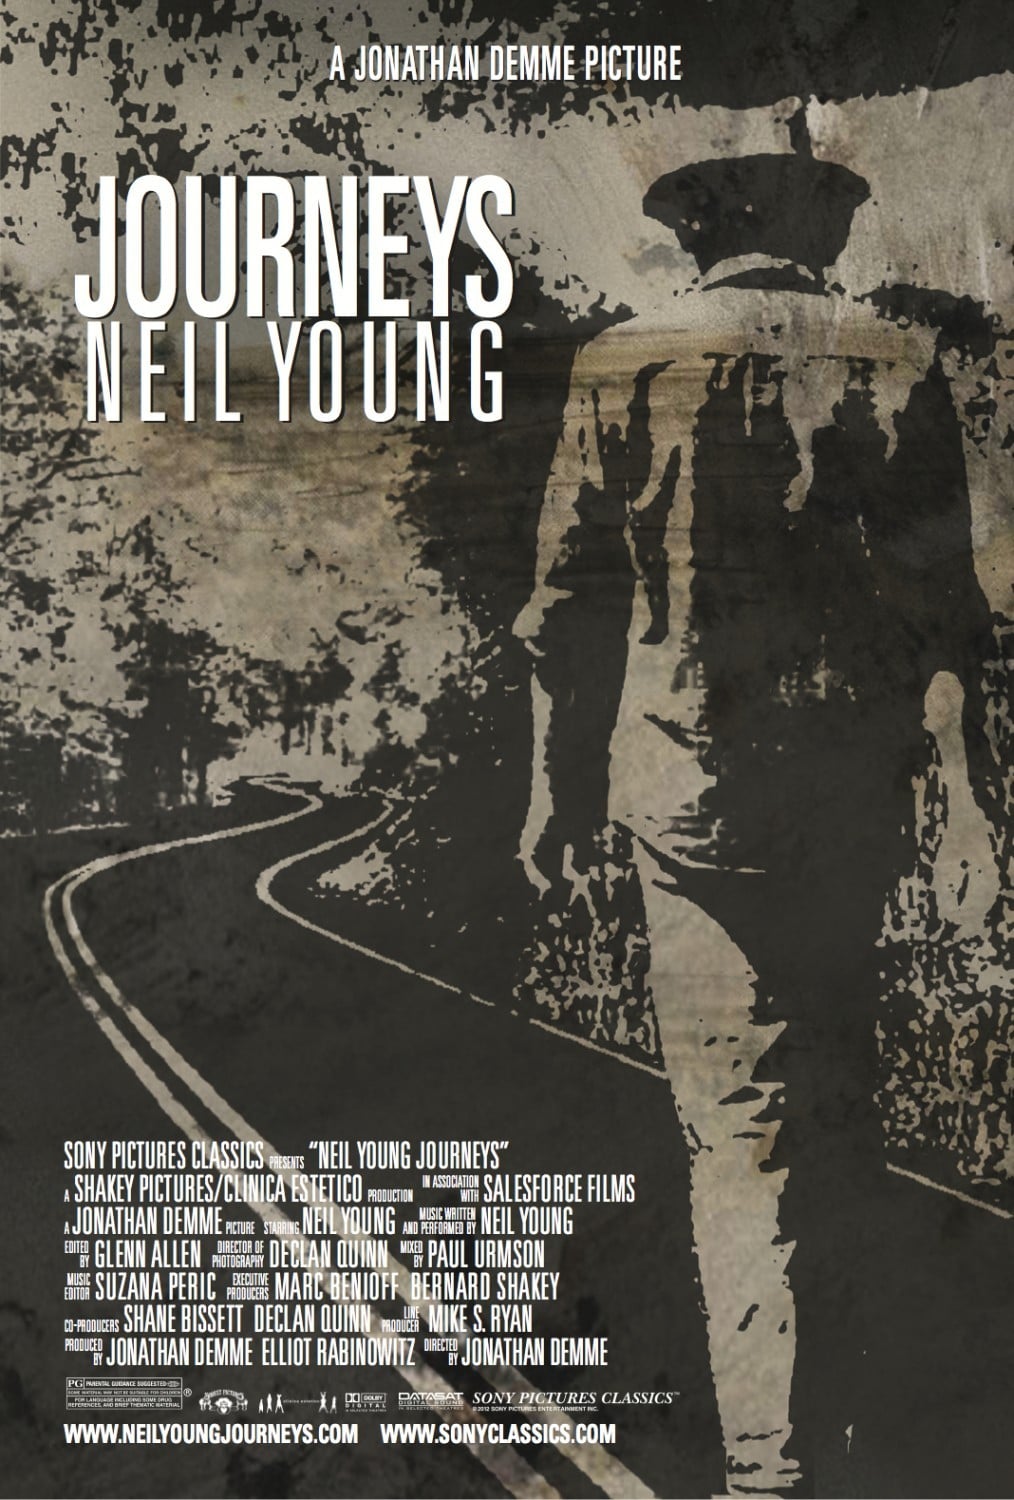 Plakat von "Neil Young Journeys"